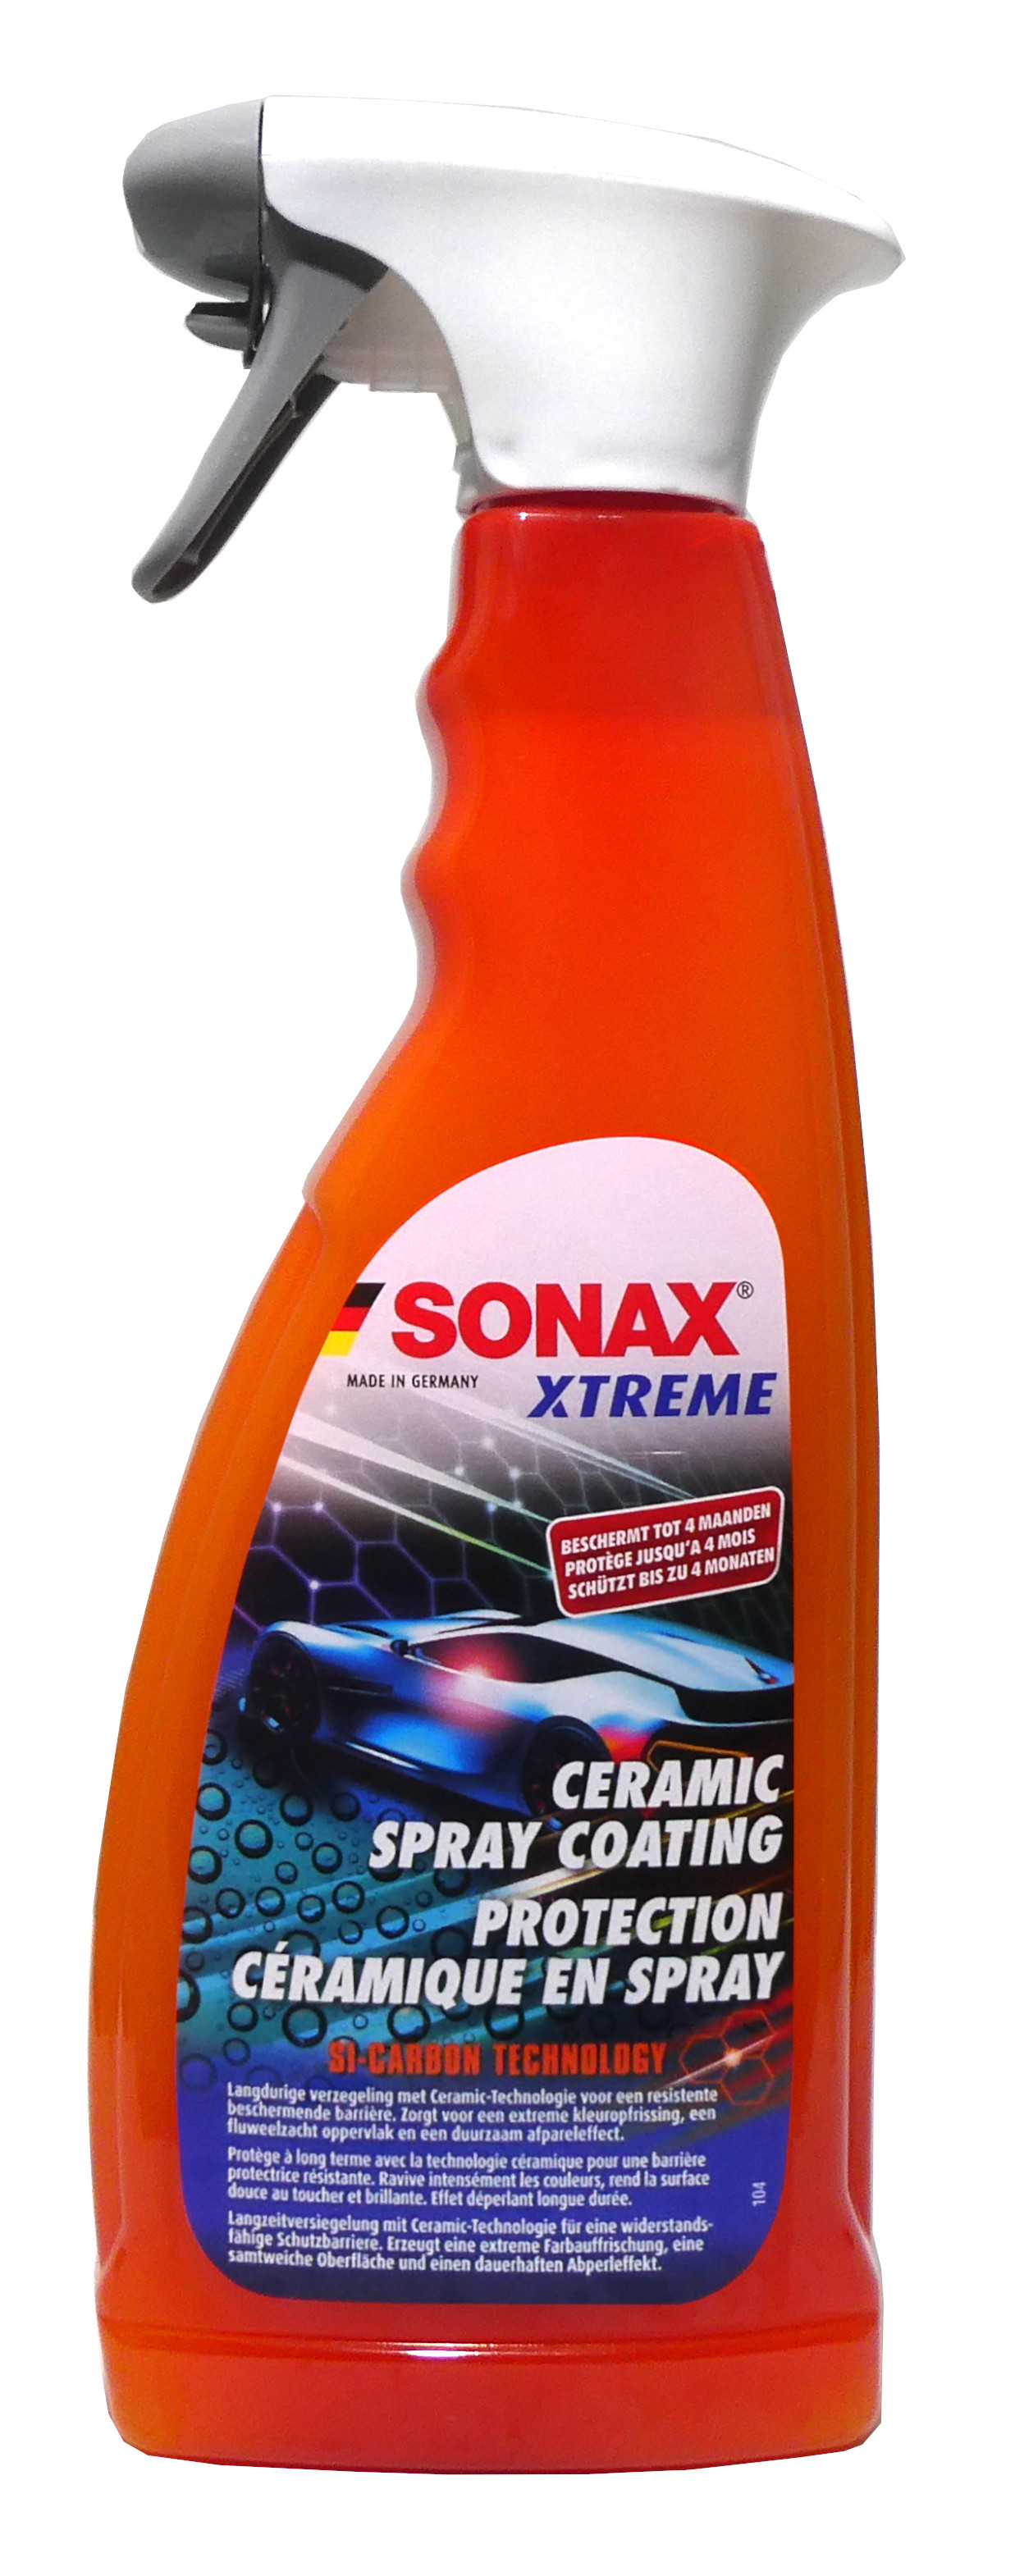 SONAX Xtreme Ceramic Spray Coating, 750ml kopen? - Autoreiniging